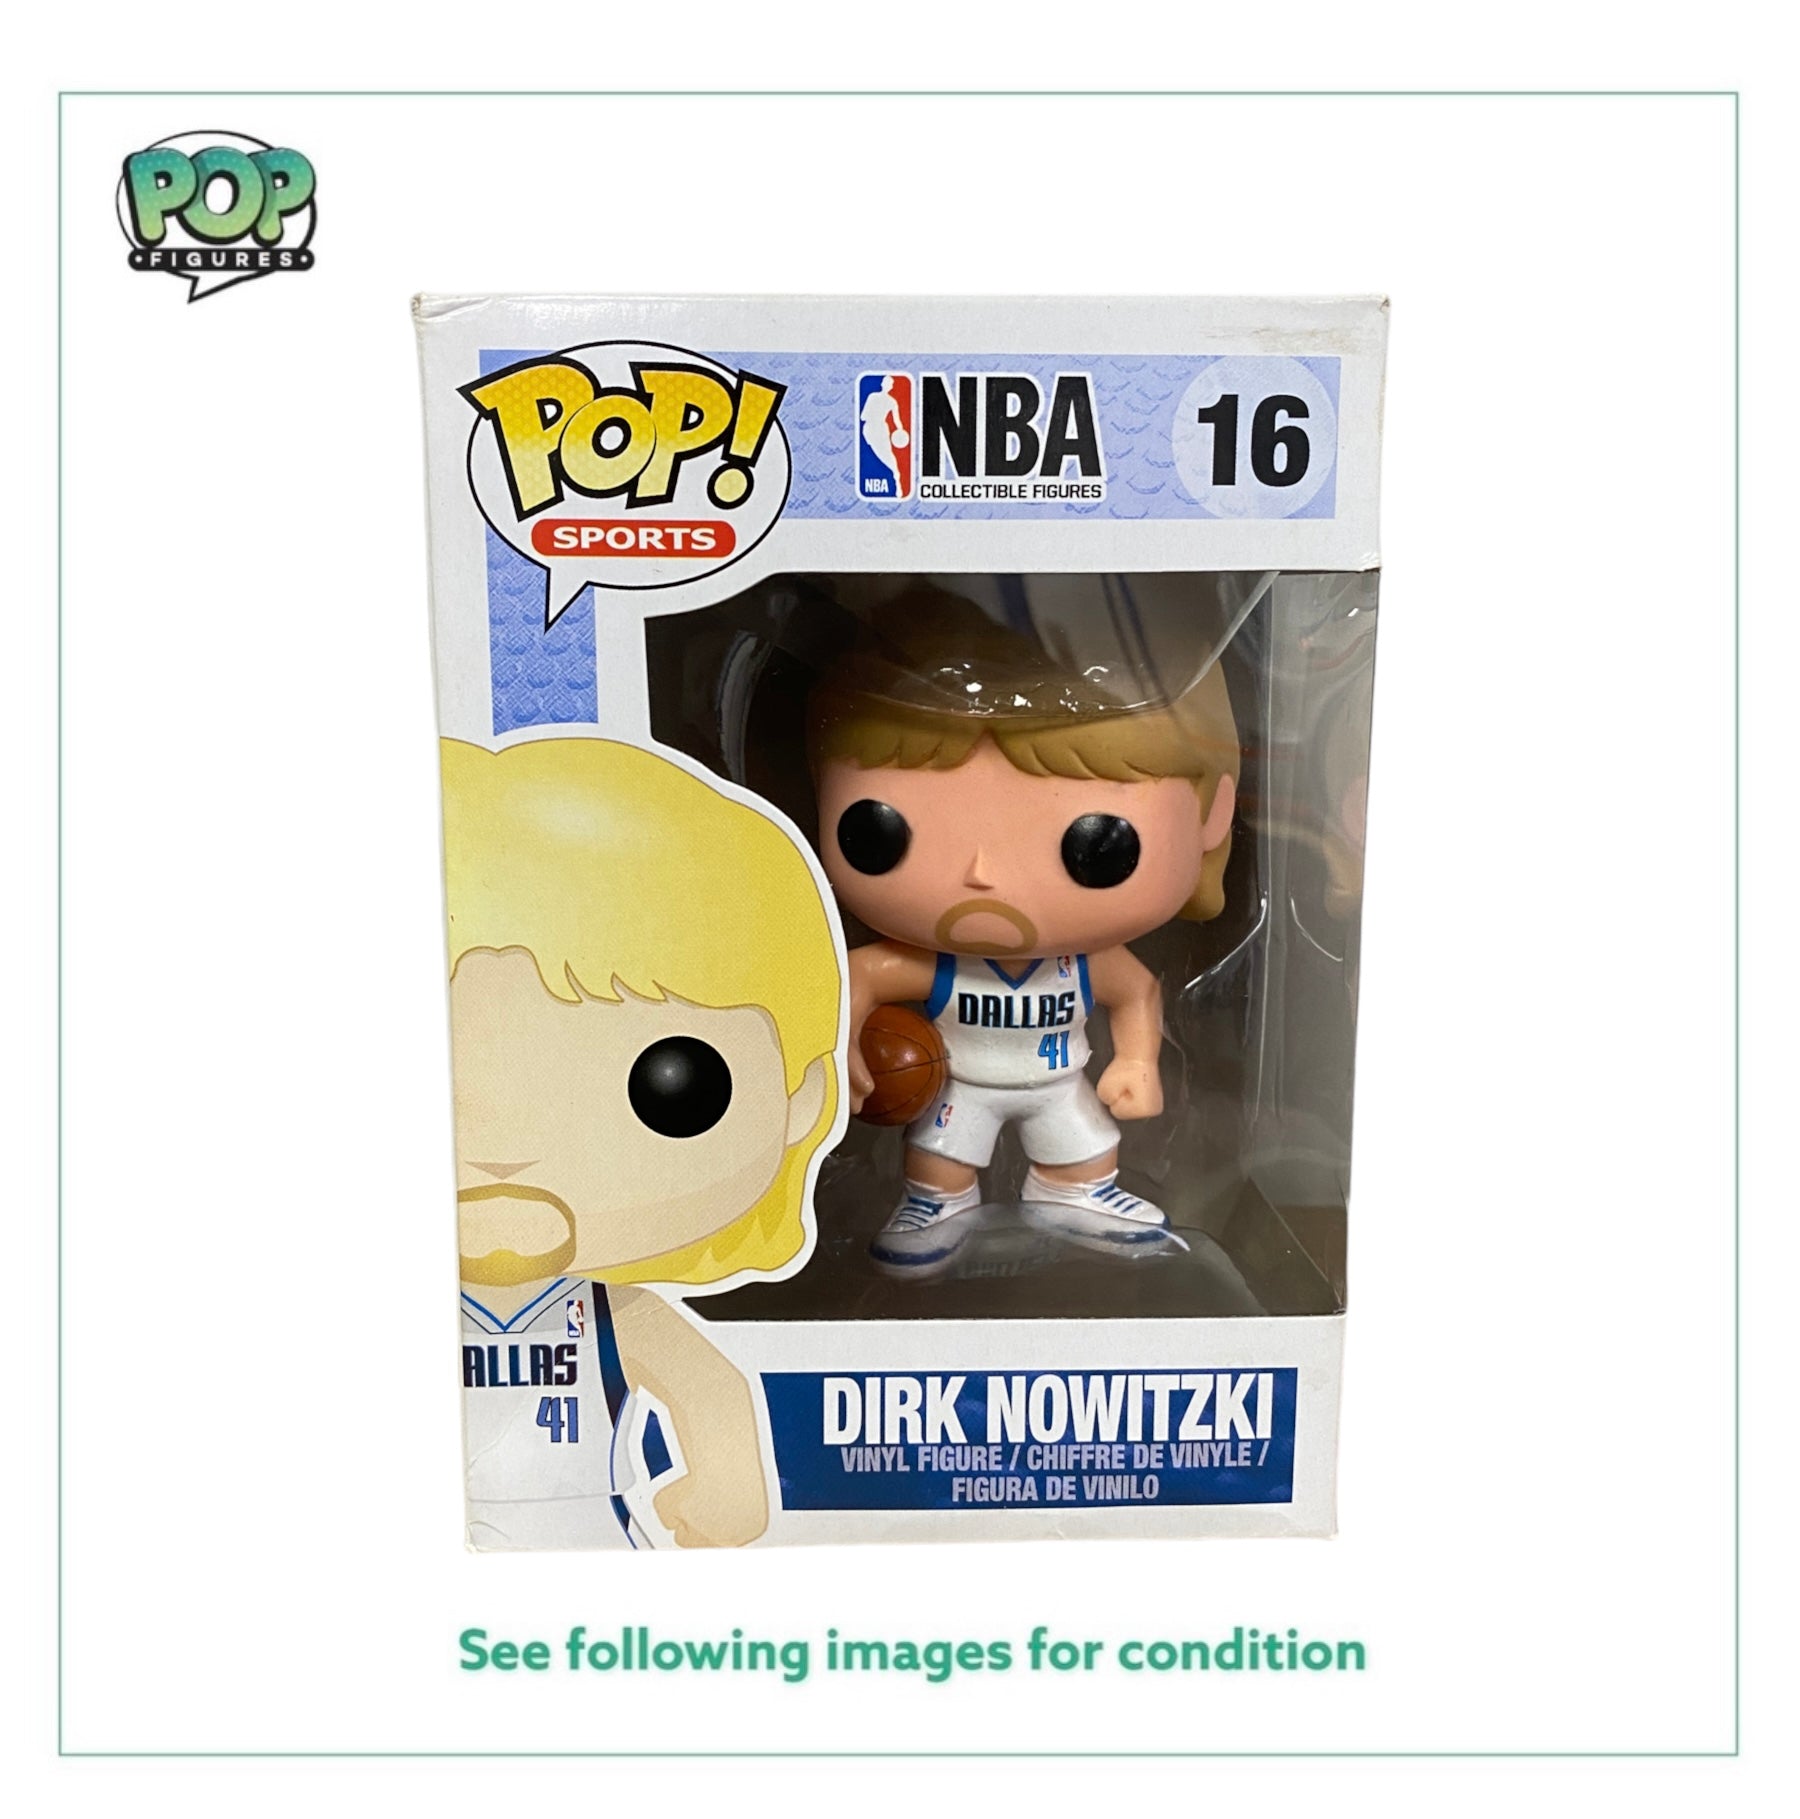 Dirk Nowitzki #16 Funko Pop! - NBA - 2013 Pop! - Condition 7.5/10